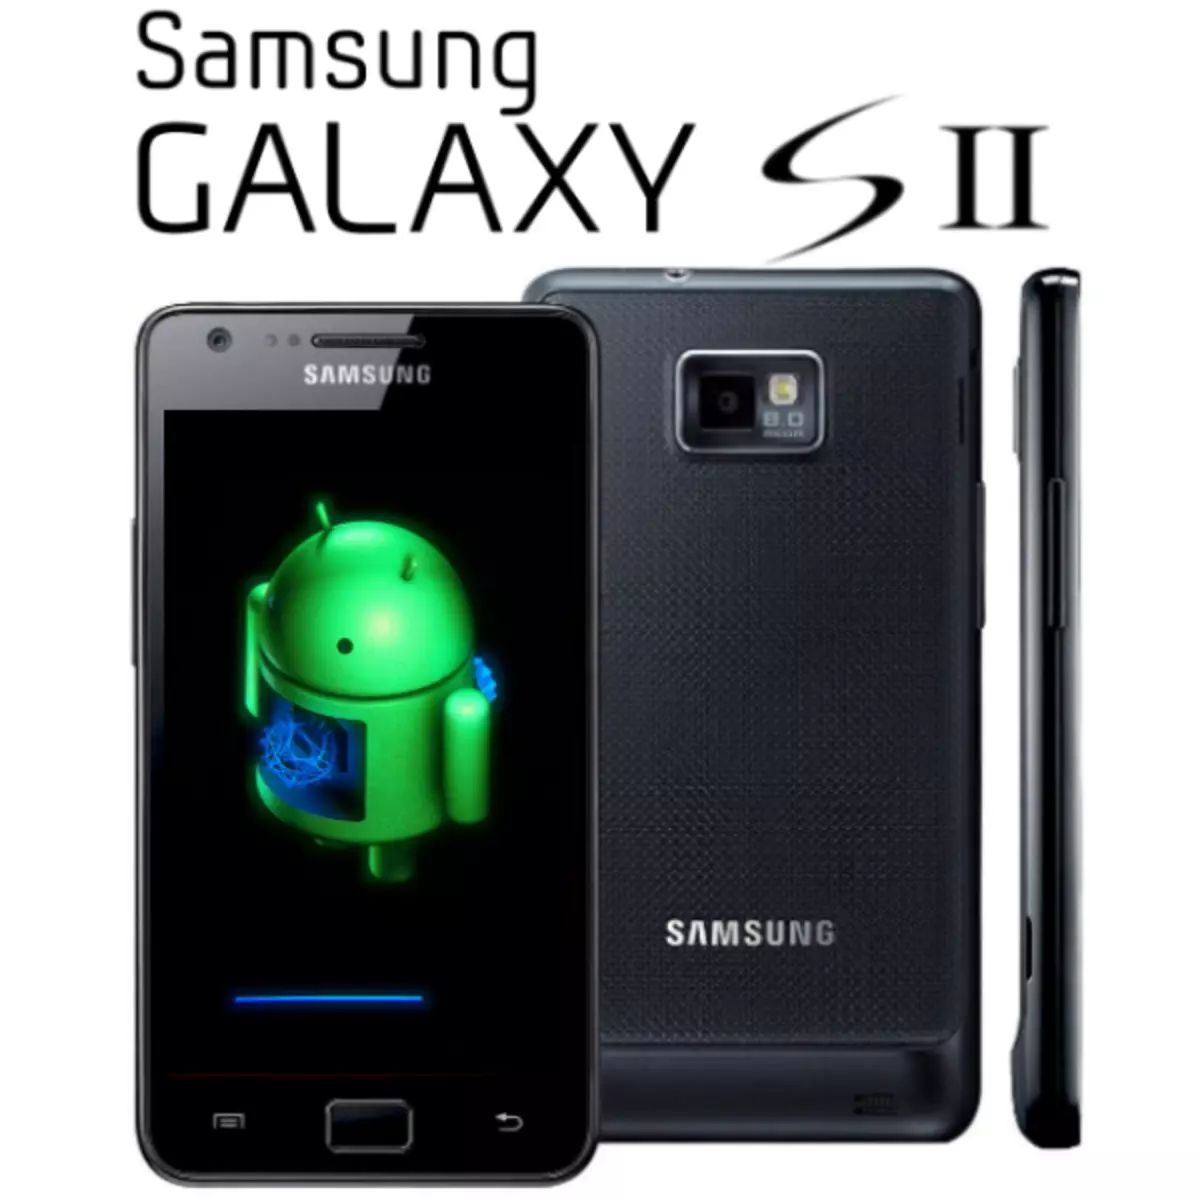 I-Samsung Galaxy S2 GT-I9100 firmware